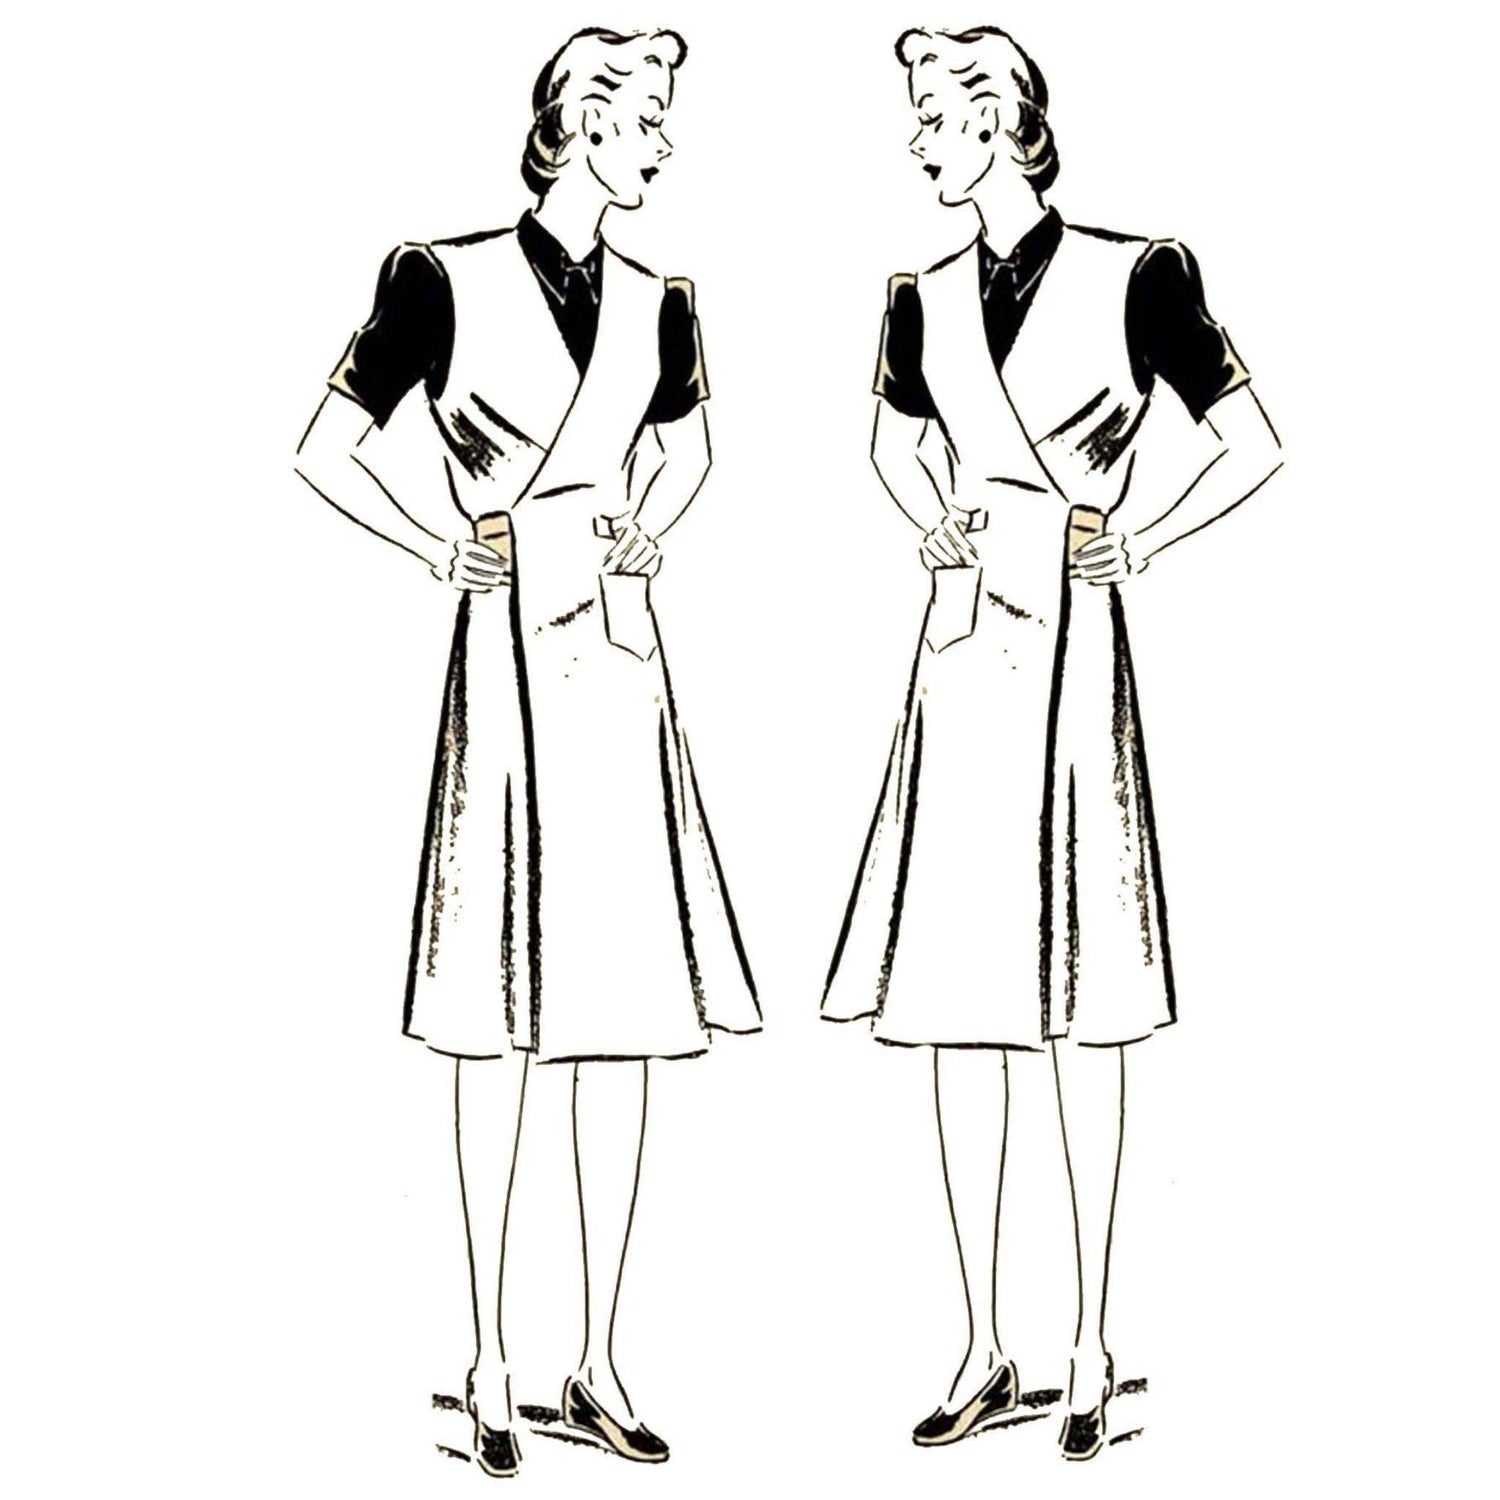 Women wearing a Women's Apron, Duster, Overalls, Pinny